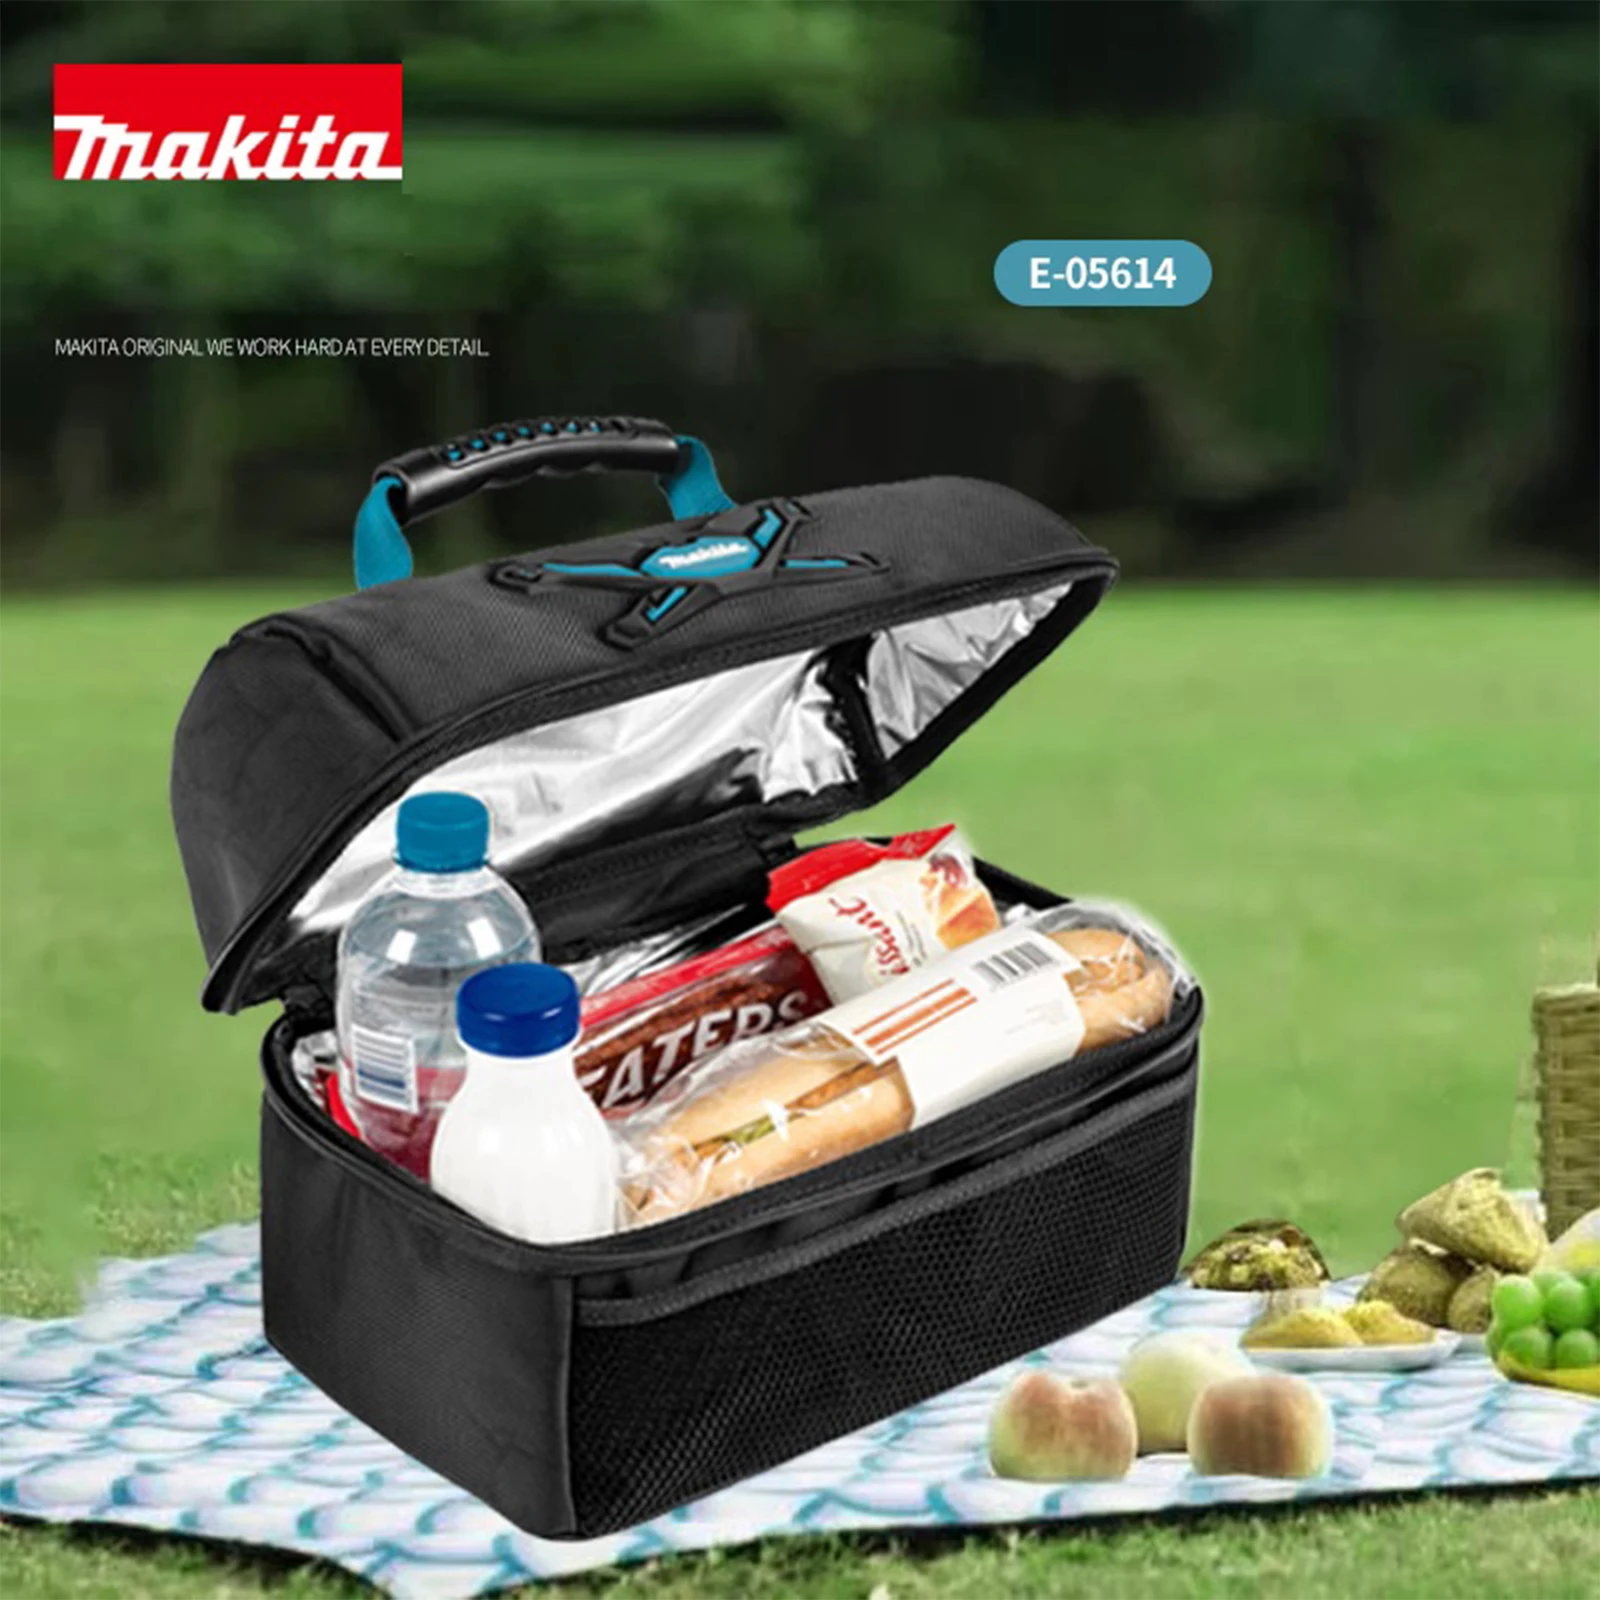 Makita USA - Product Details -195638-5